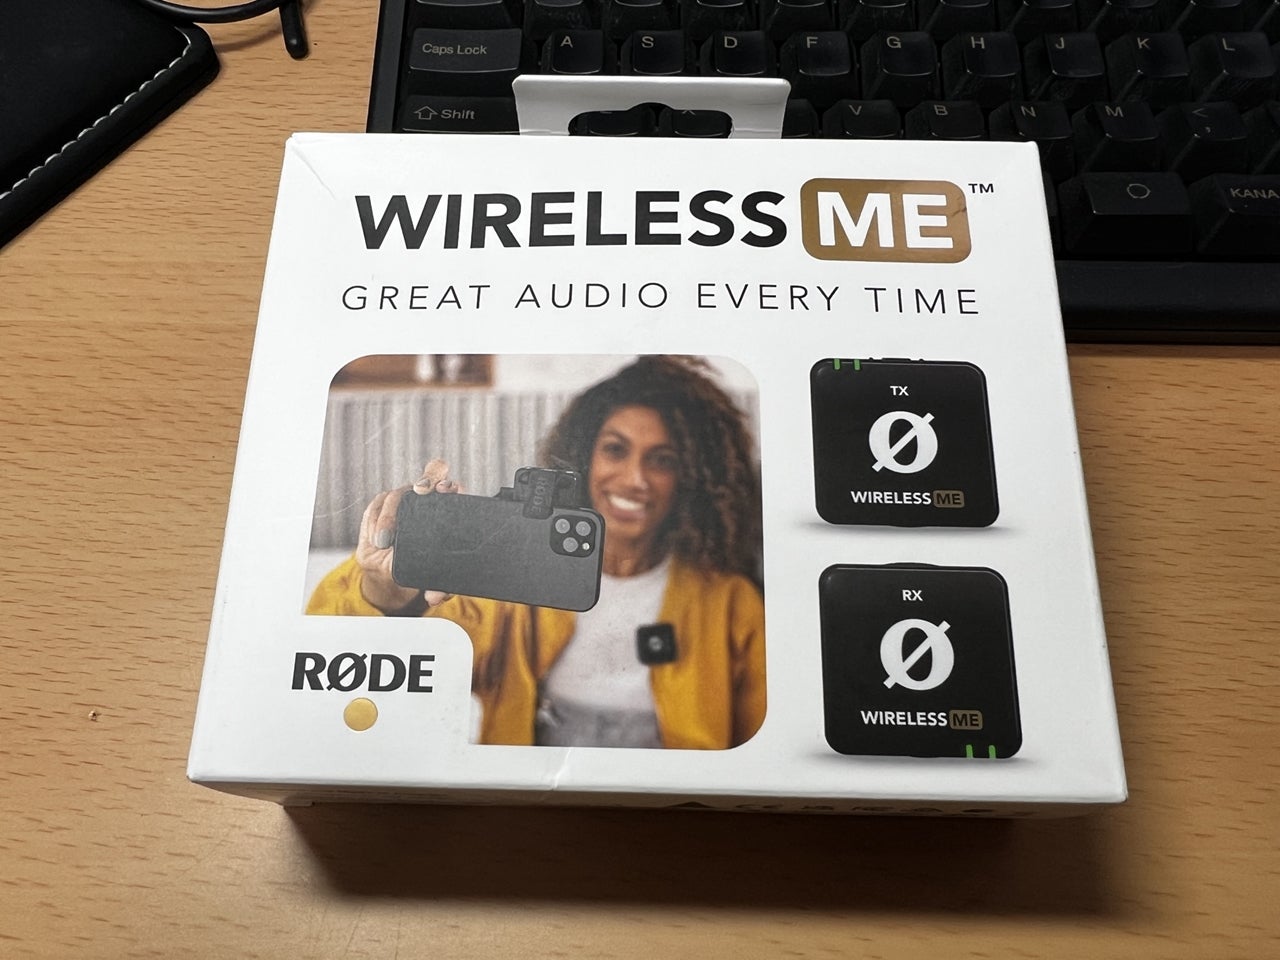 RODE Wireless Meを買ってみた    Not Found #Rev2.0